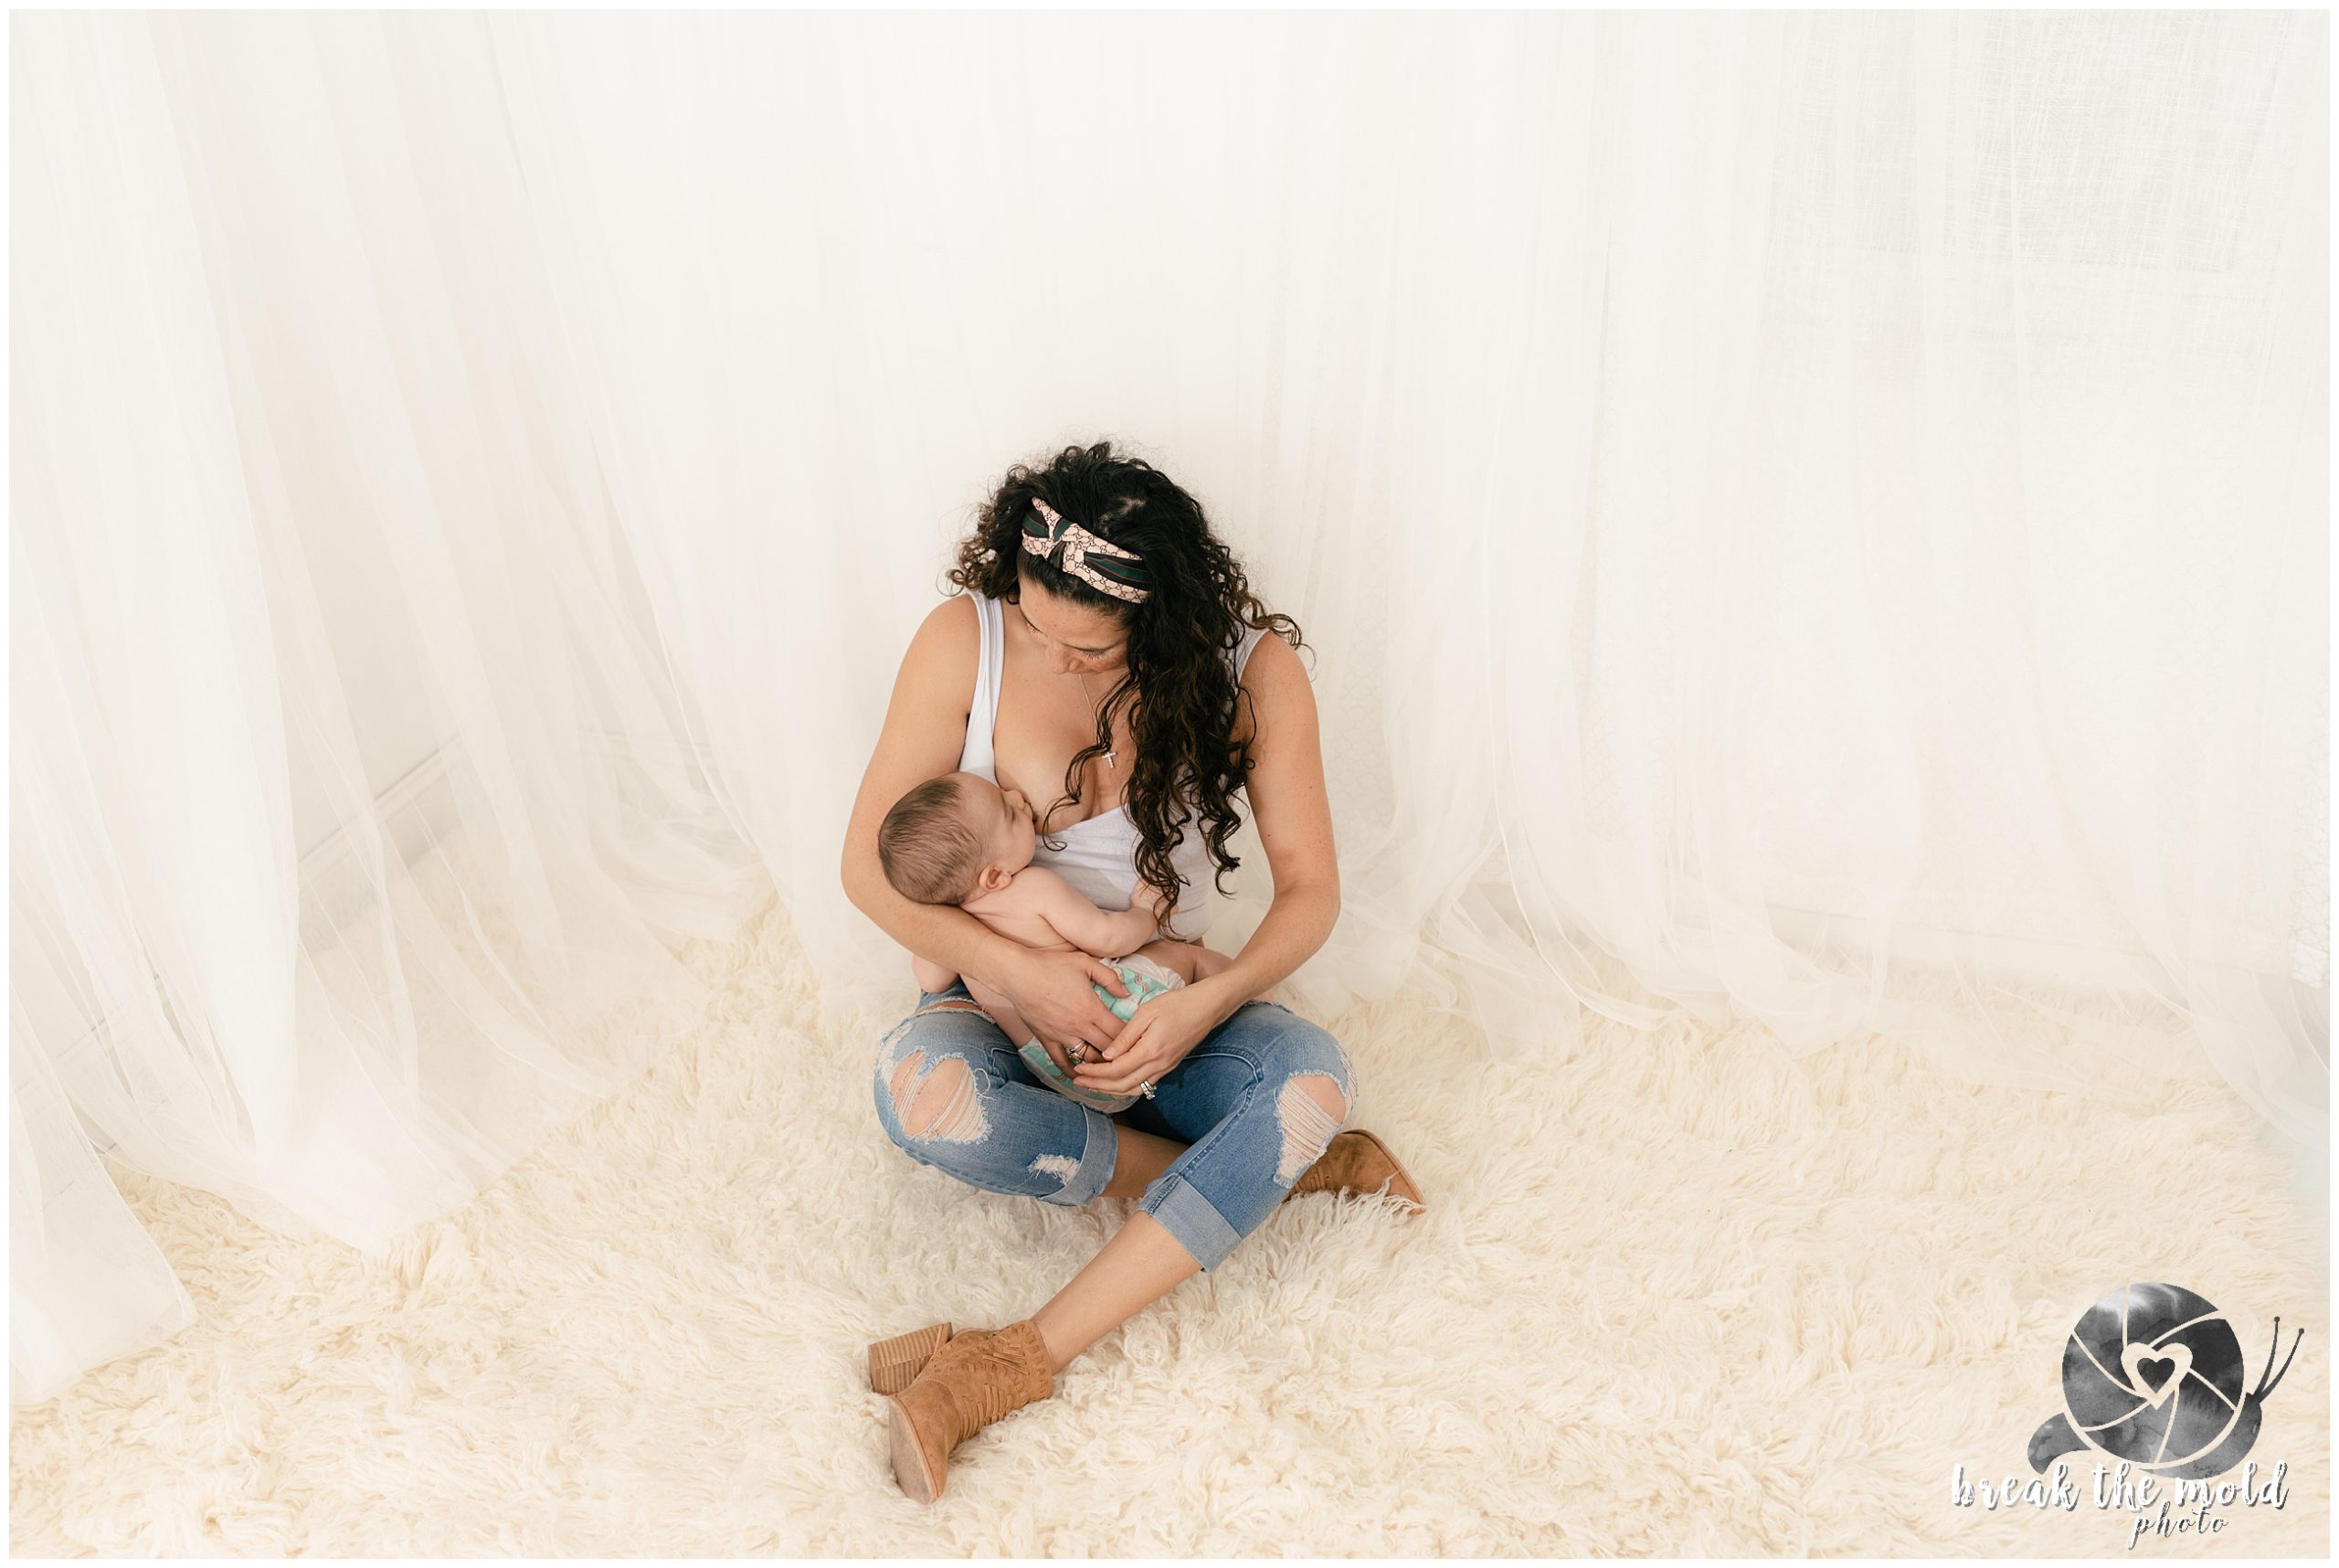 break-the-mold-photo-studio-knoxville-breastfeeding-photographer-mommy-baby-child-breastfed-portraits_0047.jpg